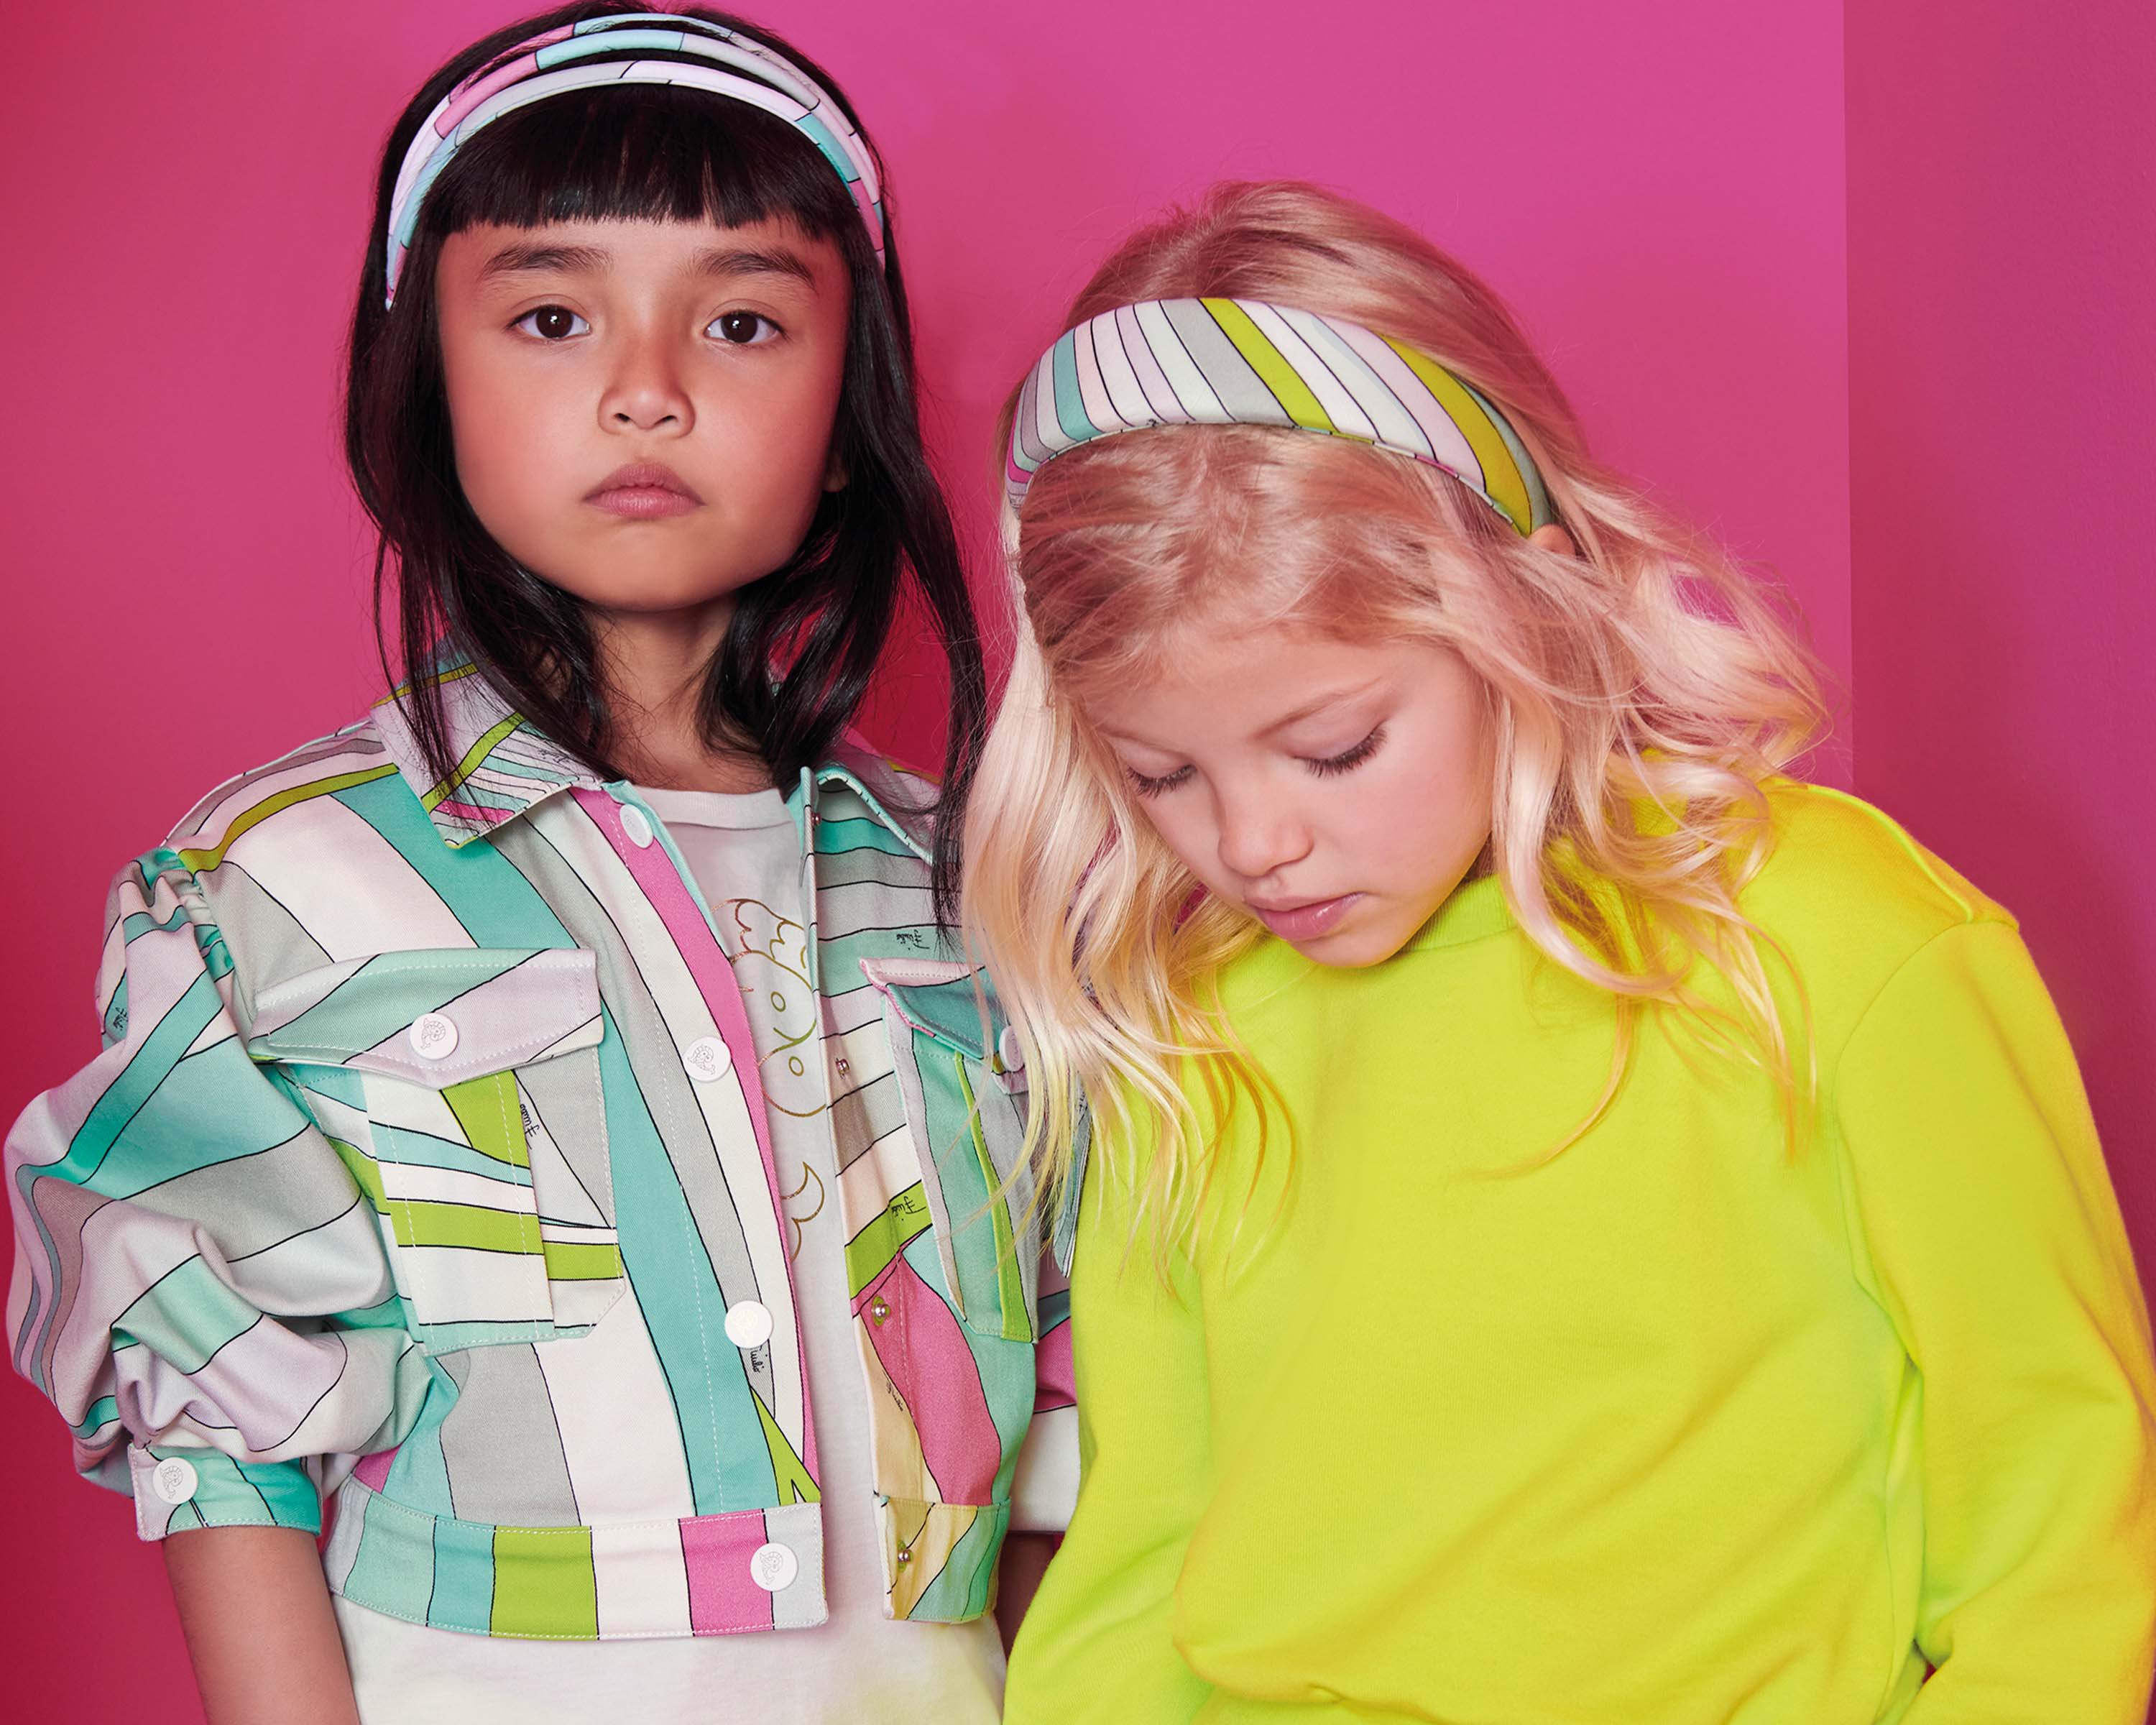 Emilio Pucci Kids Multicoloured Dress for Girls